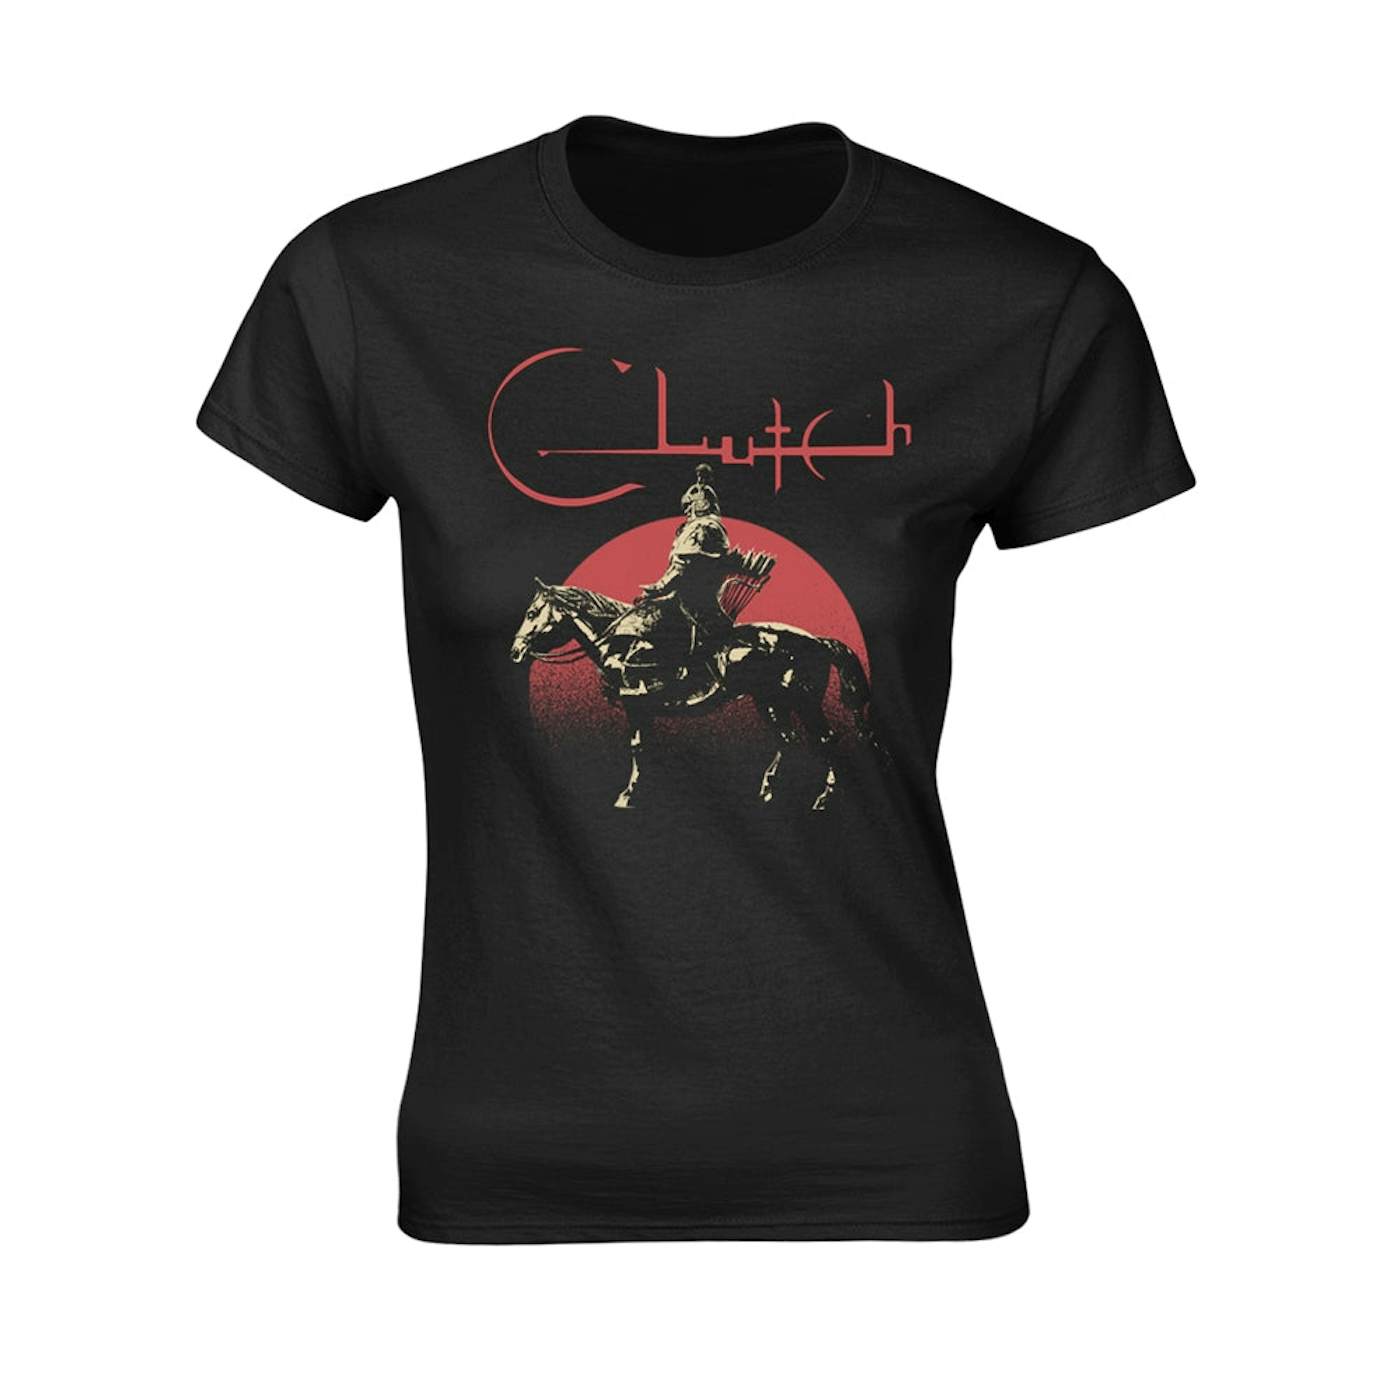 Clutch Women's T Shirt - Horserider